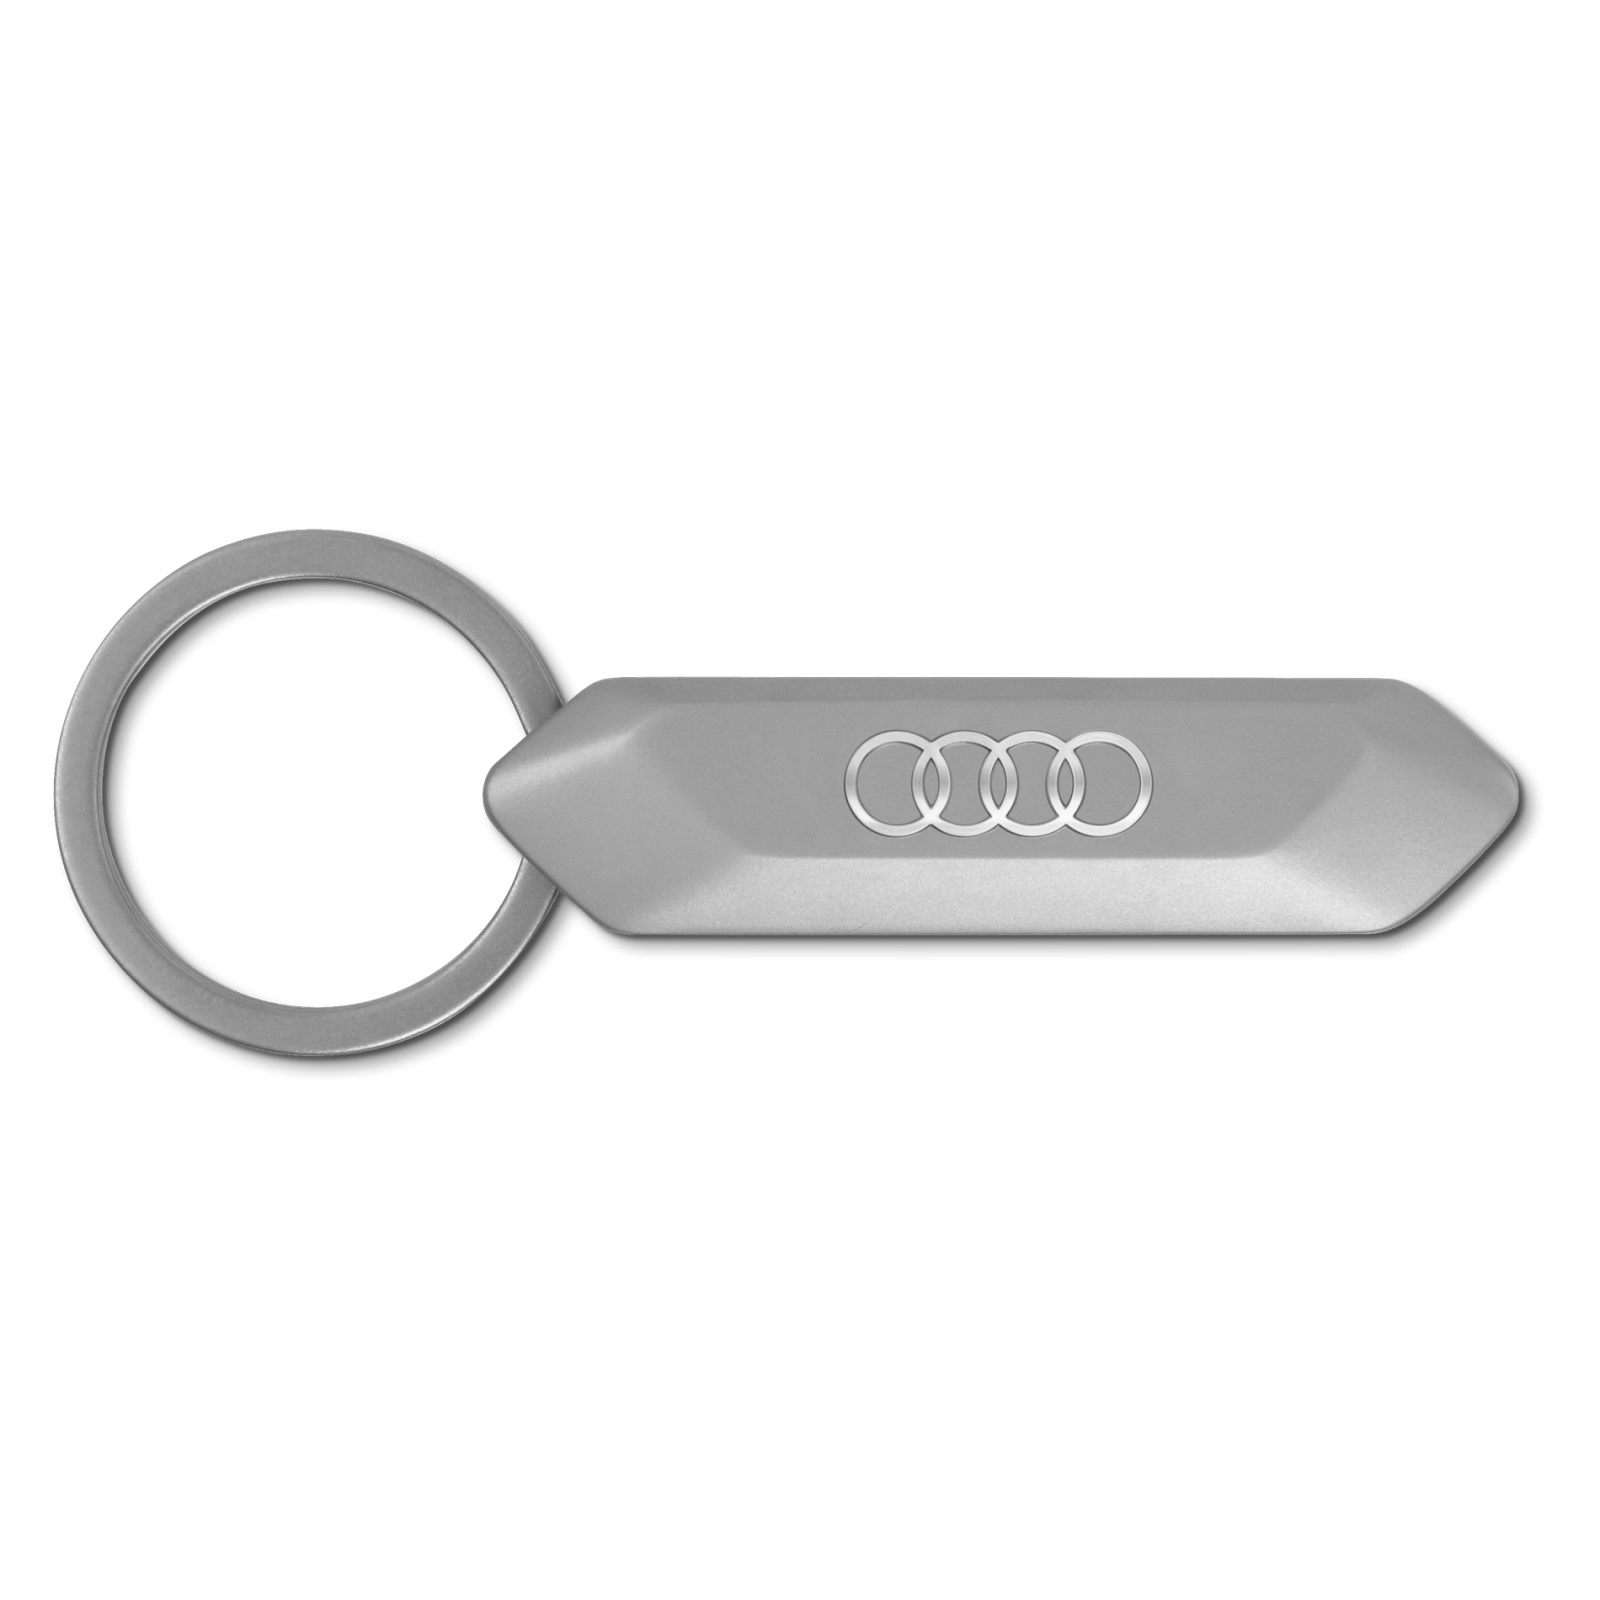 rot Audi 3182000300 Schlüsselanhänger Sport Logo Emblem Schlüsselband Keyring Schlaufe 